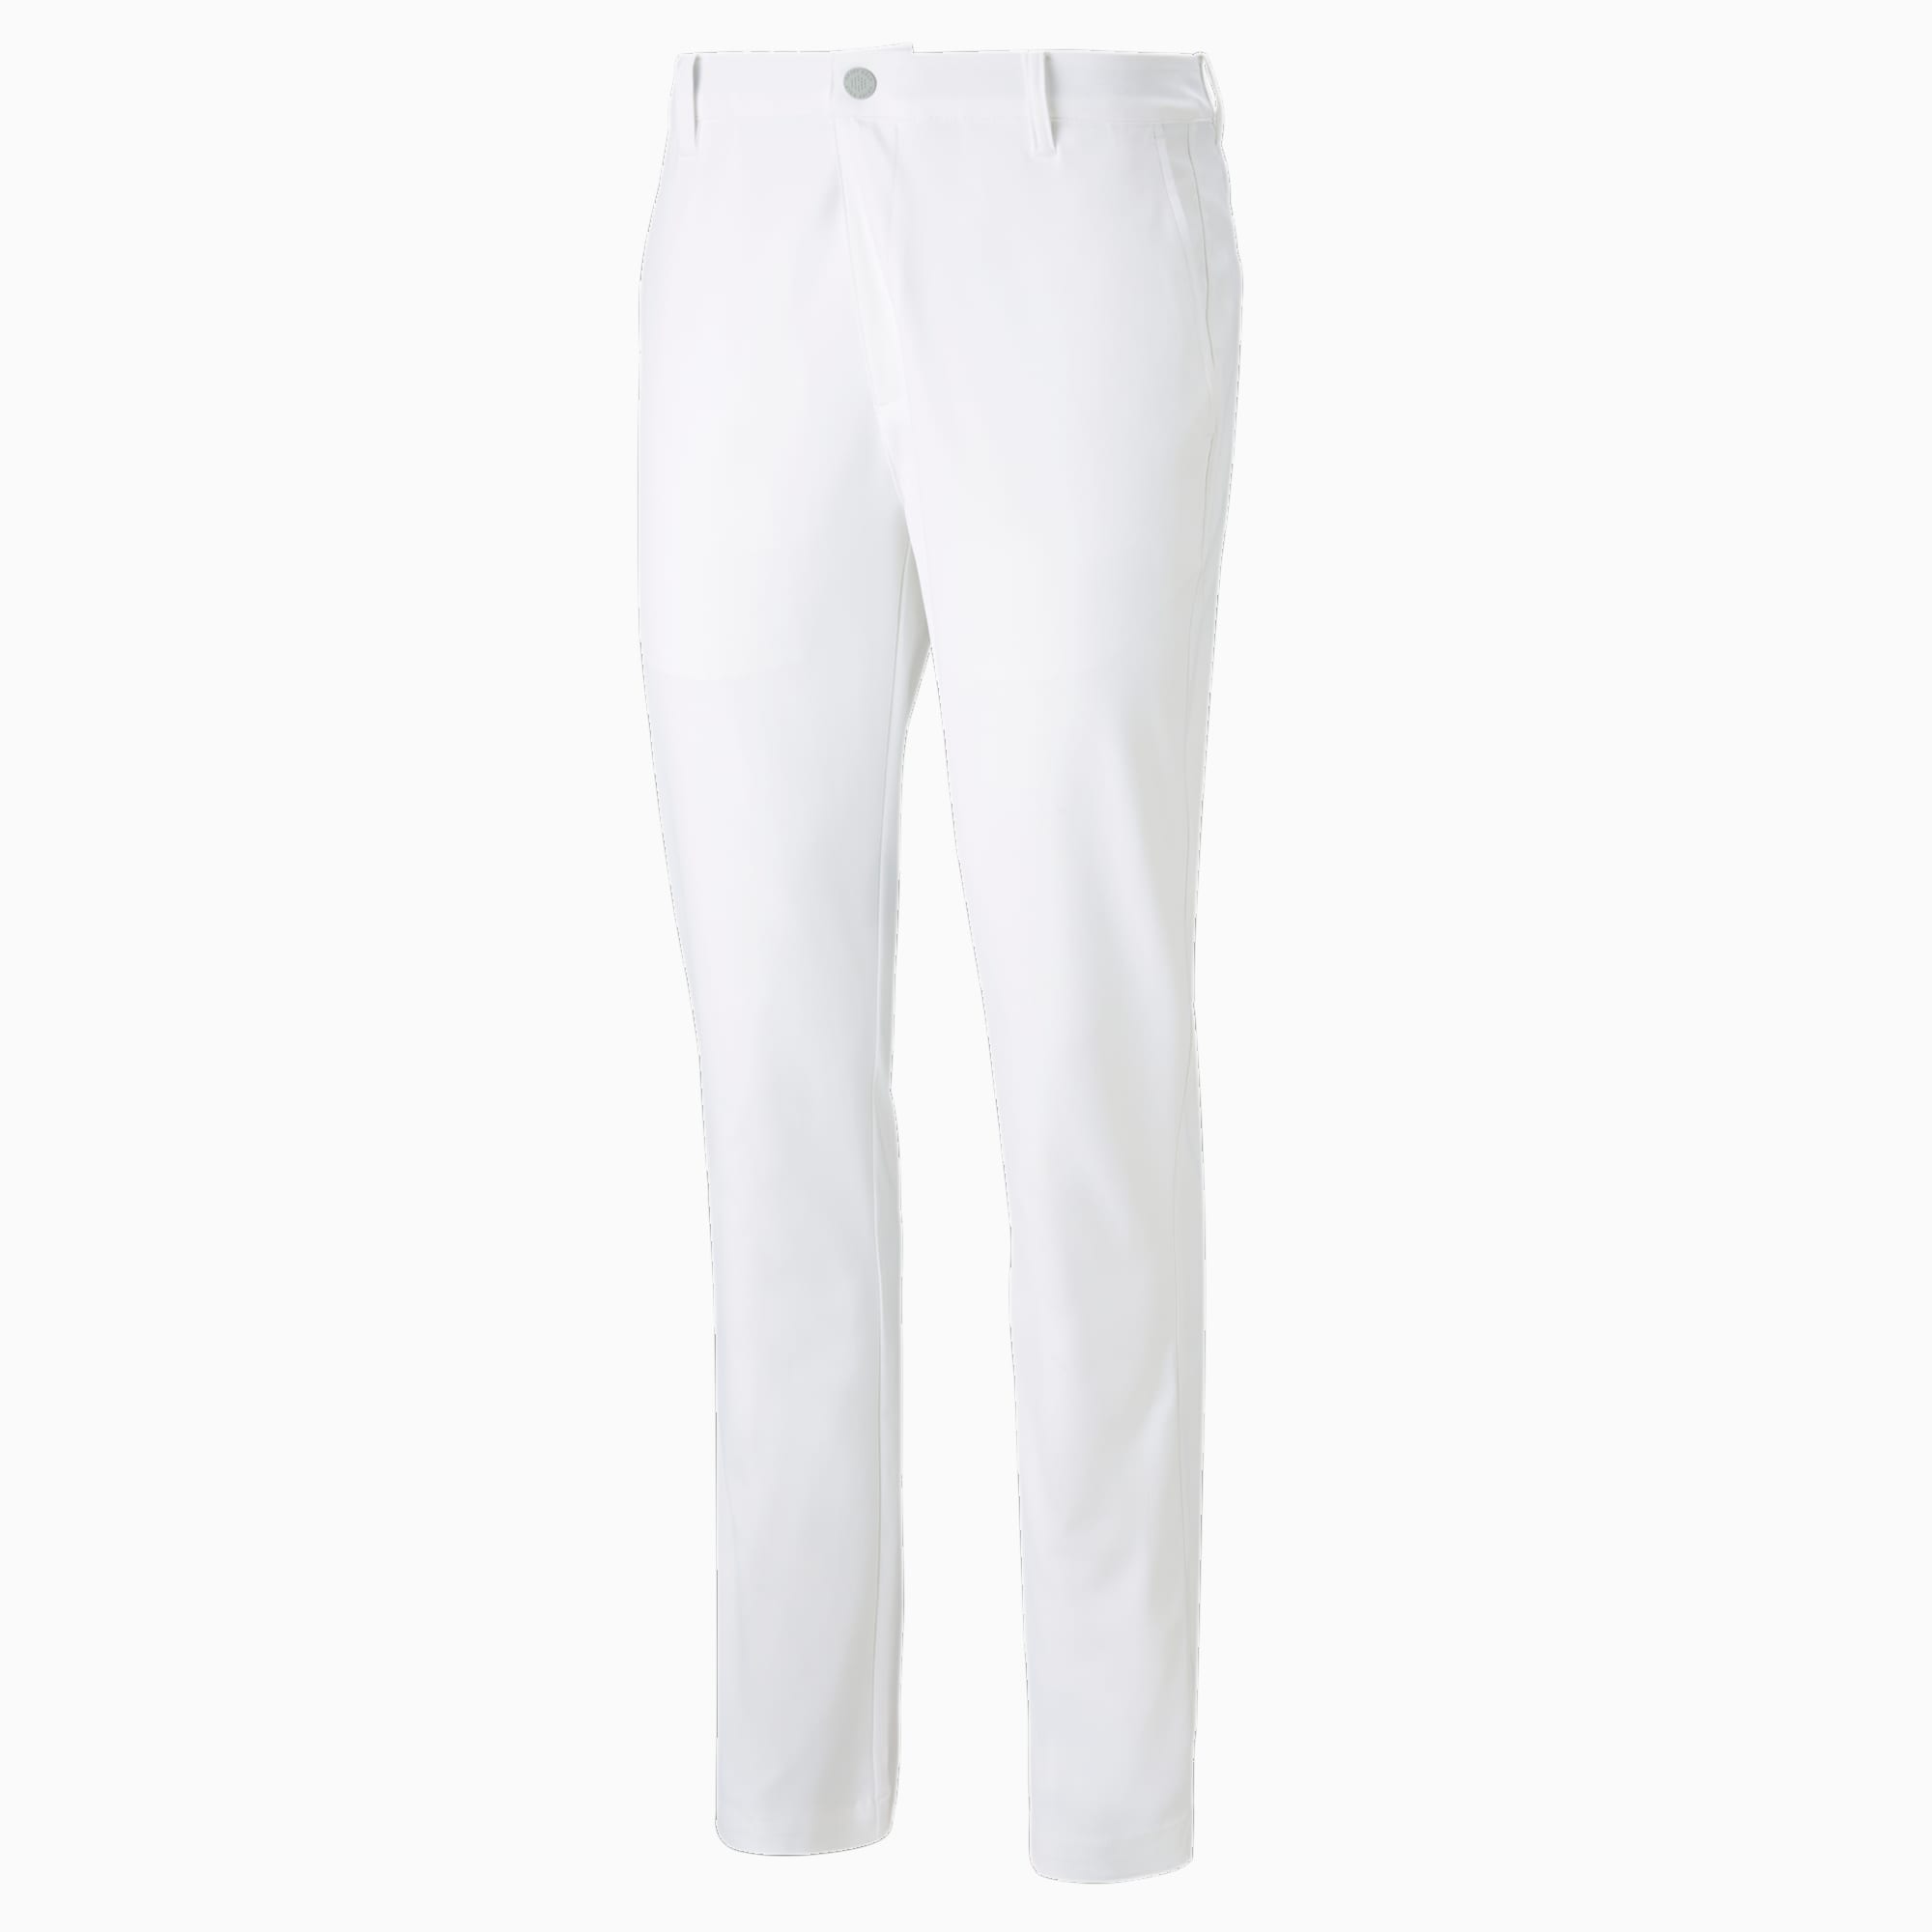 PUMA Dealer Tailored Golf Pants Men, White Glow, Size 40/32, Clothing